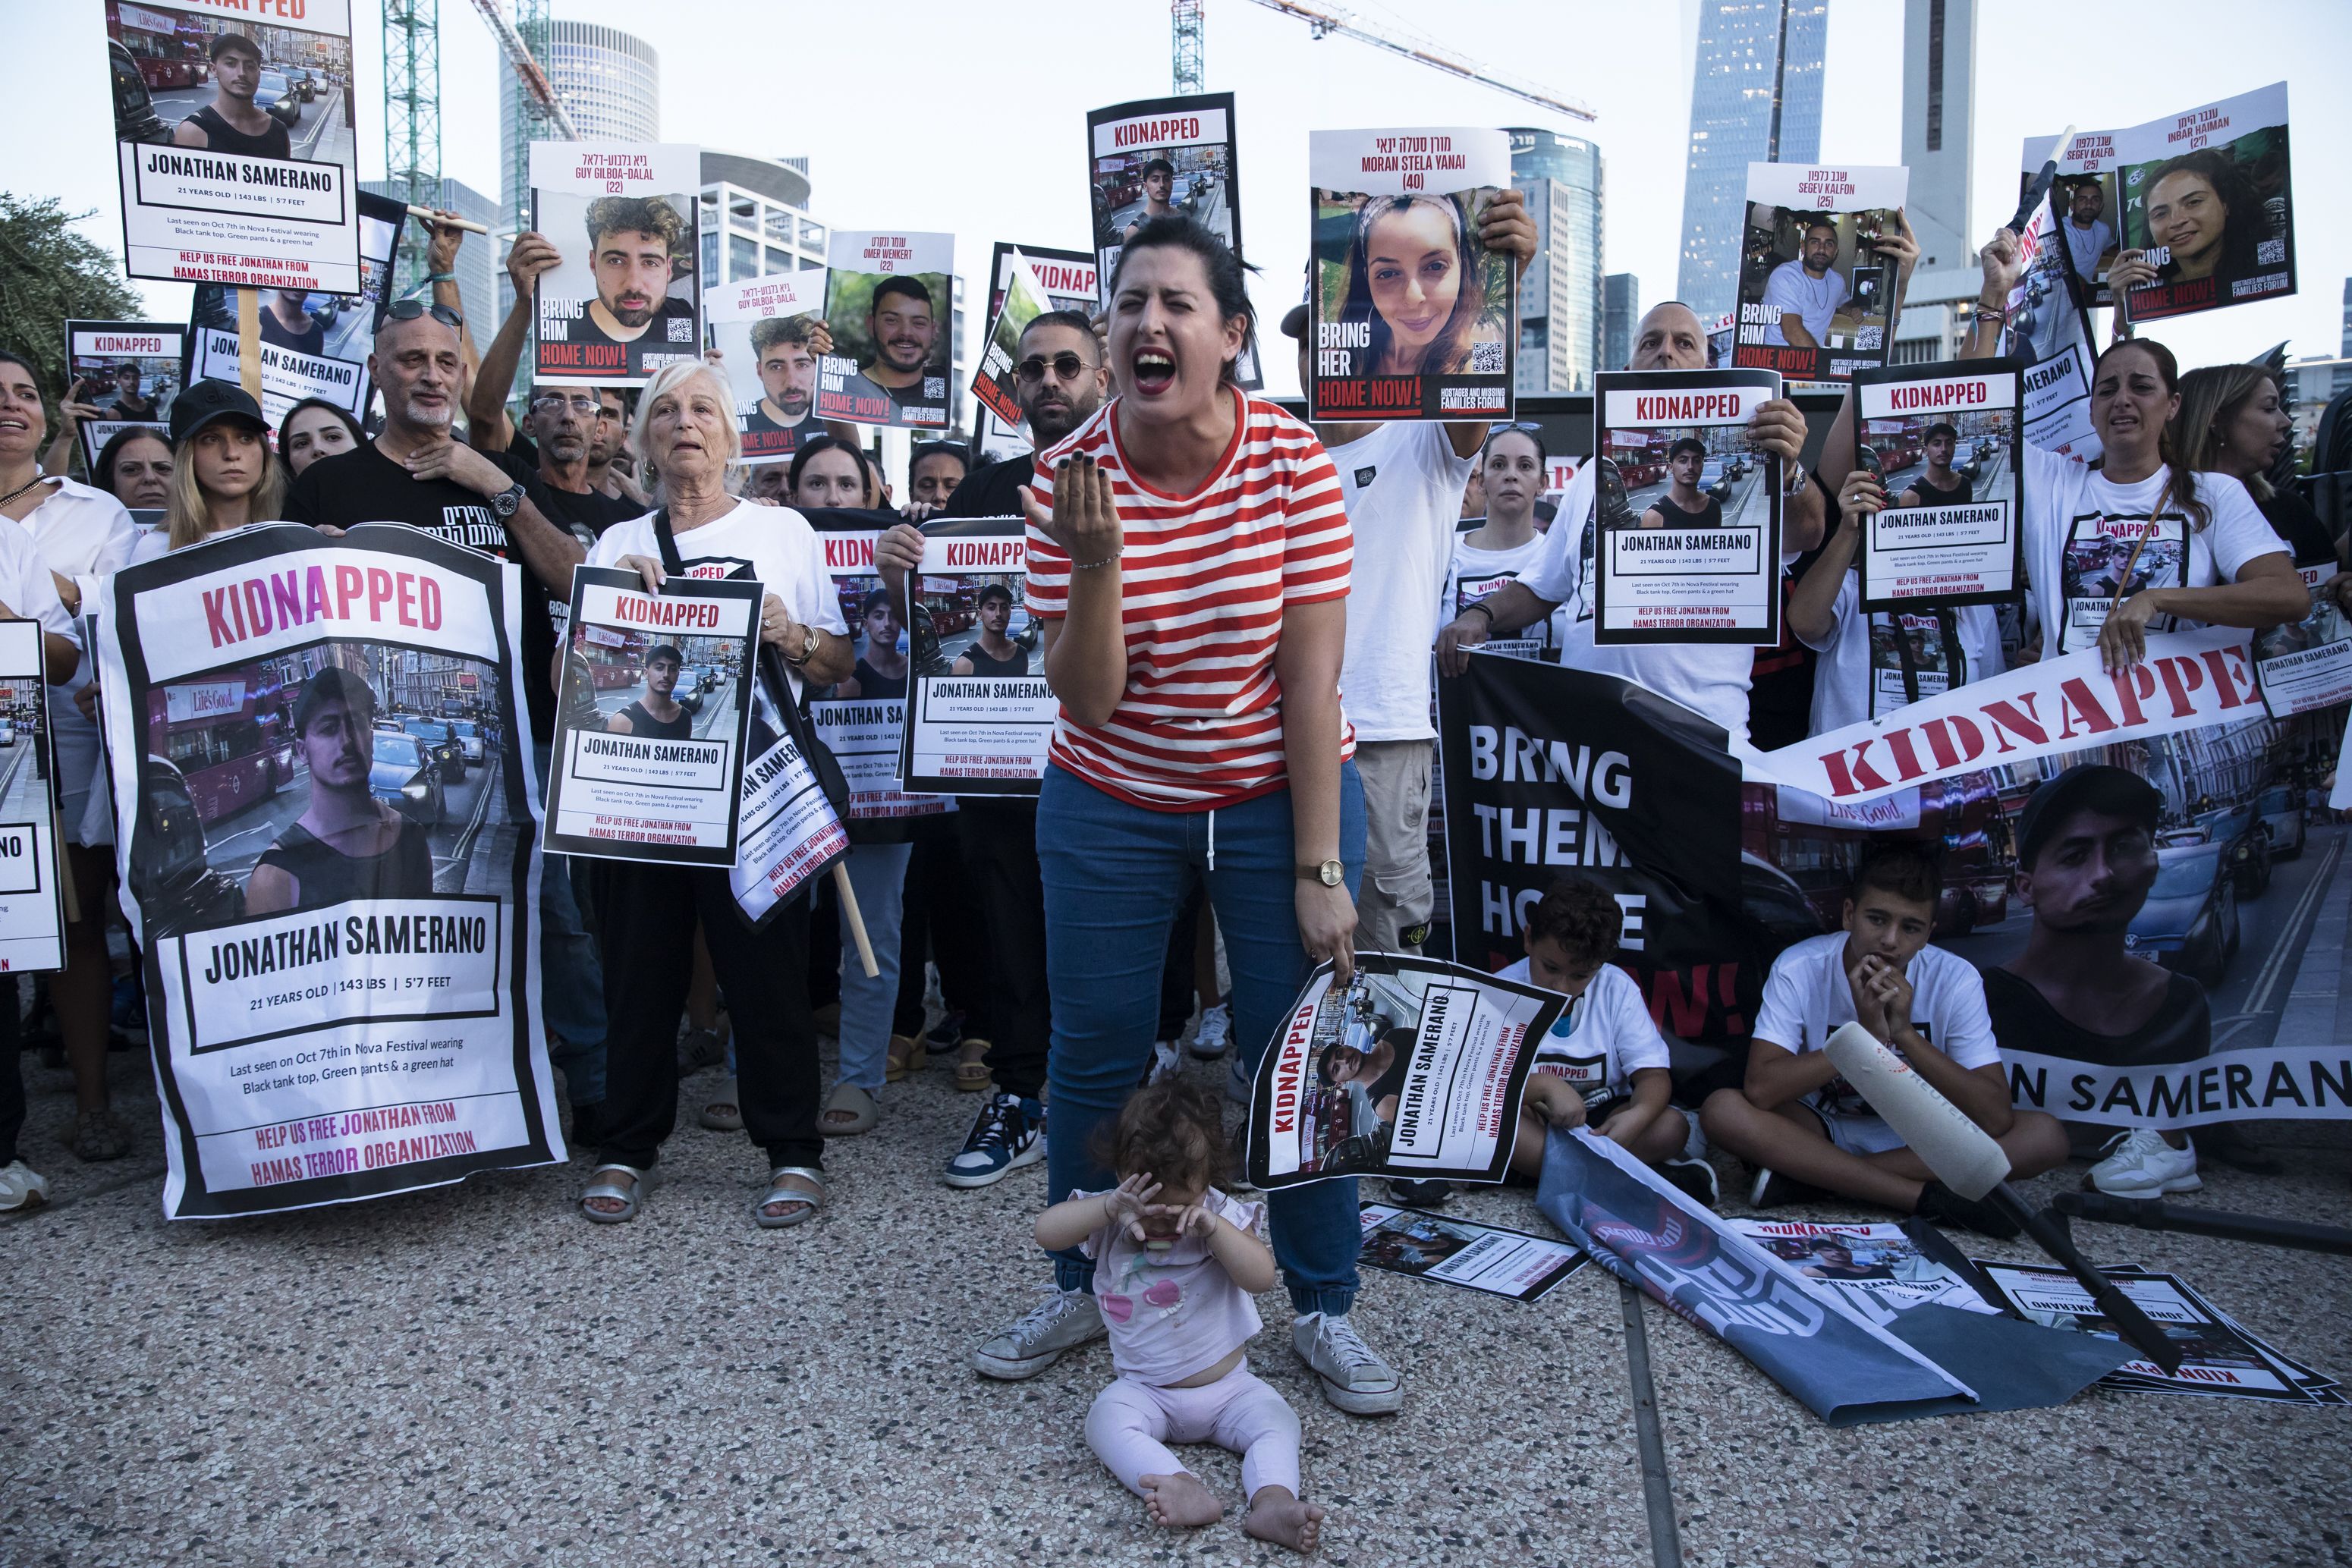 Relatives of hostages held in Gaza demonstrate in Tel Aviv, Israel, on October 26.